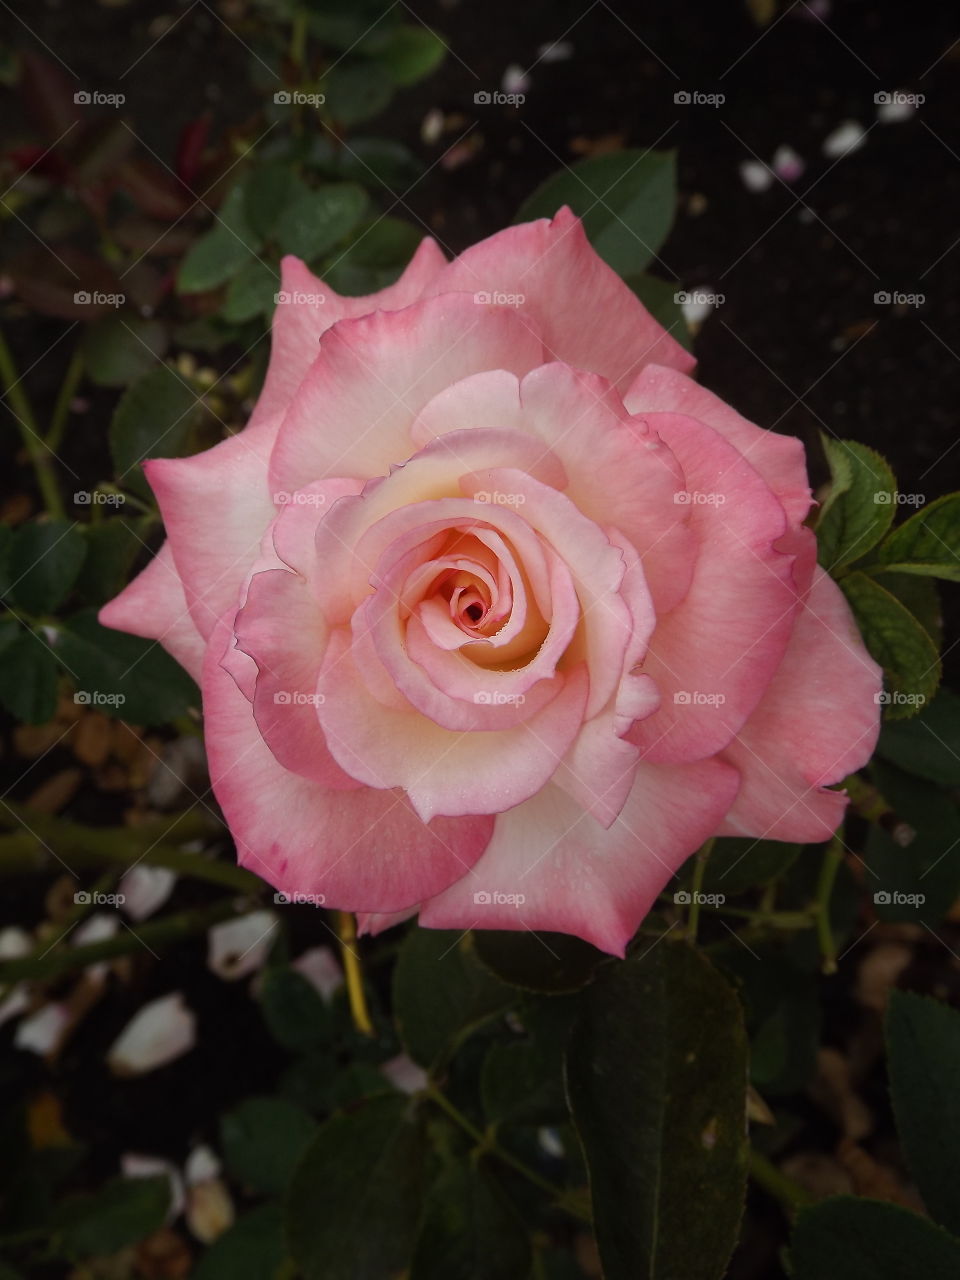 Pink Rose. I took this photo at Balboa Park